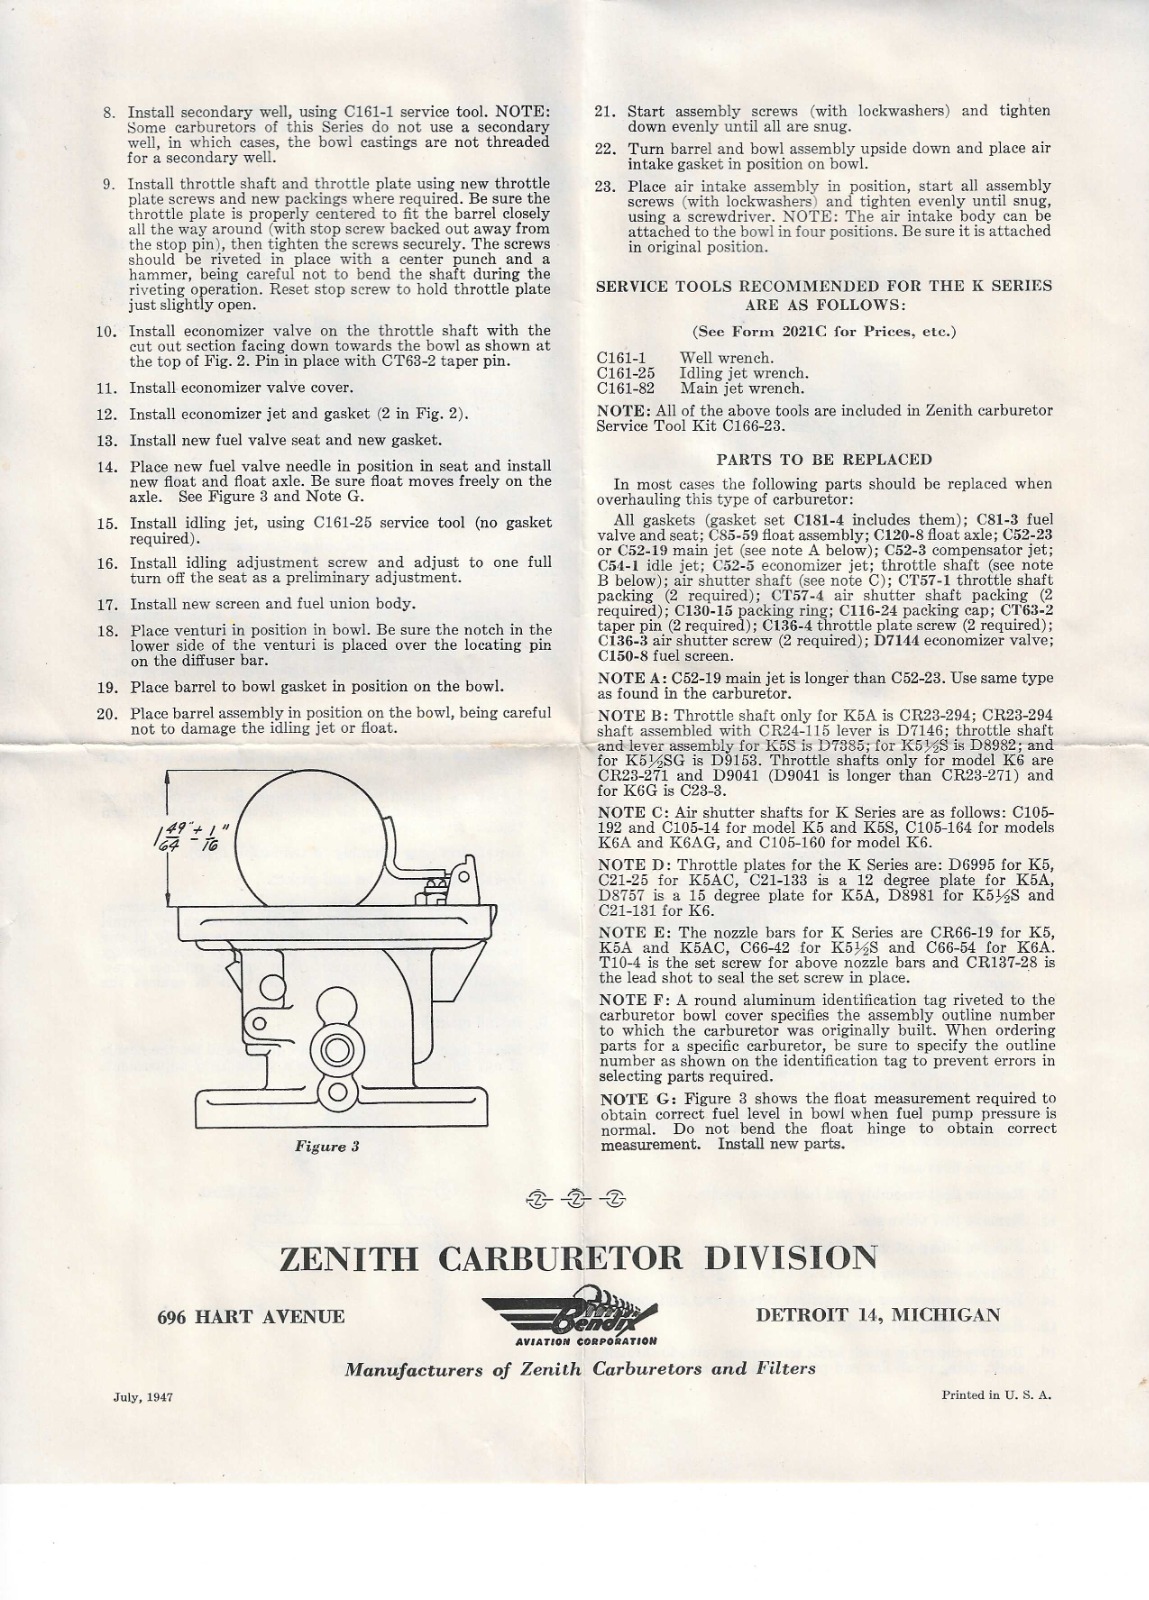 Zenith K5 Bulletin Z-167-A-1954 pg 2.jpeg